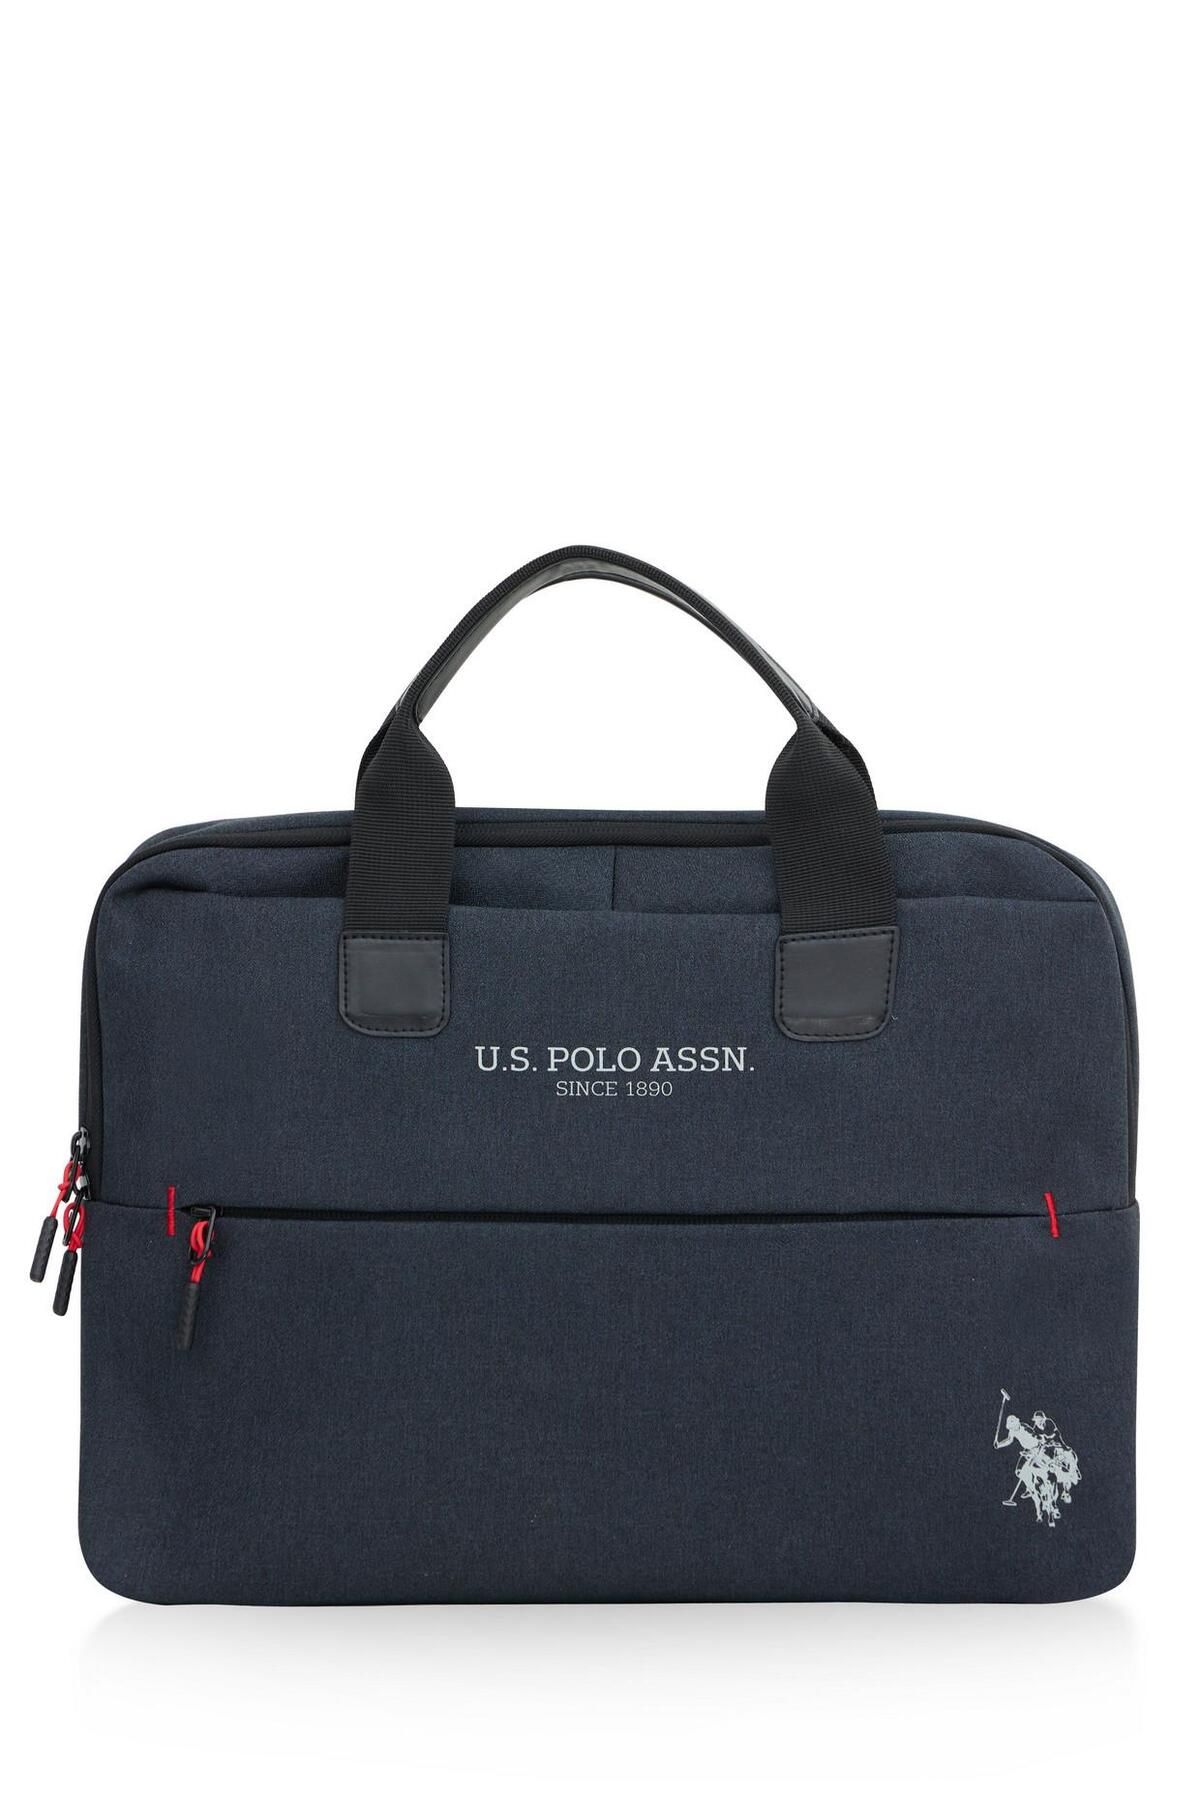 U.S. Polo Assn. U.S. POLO ASSN. PLEVR23681 Siyah Unisex Laptop Çantası